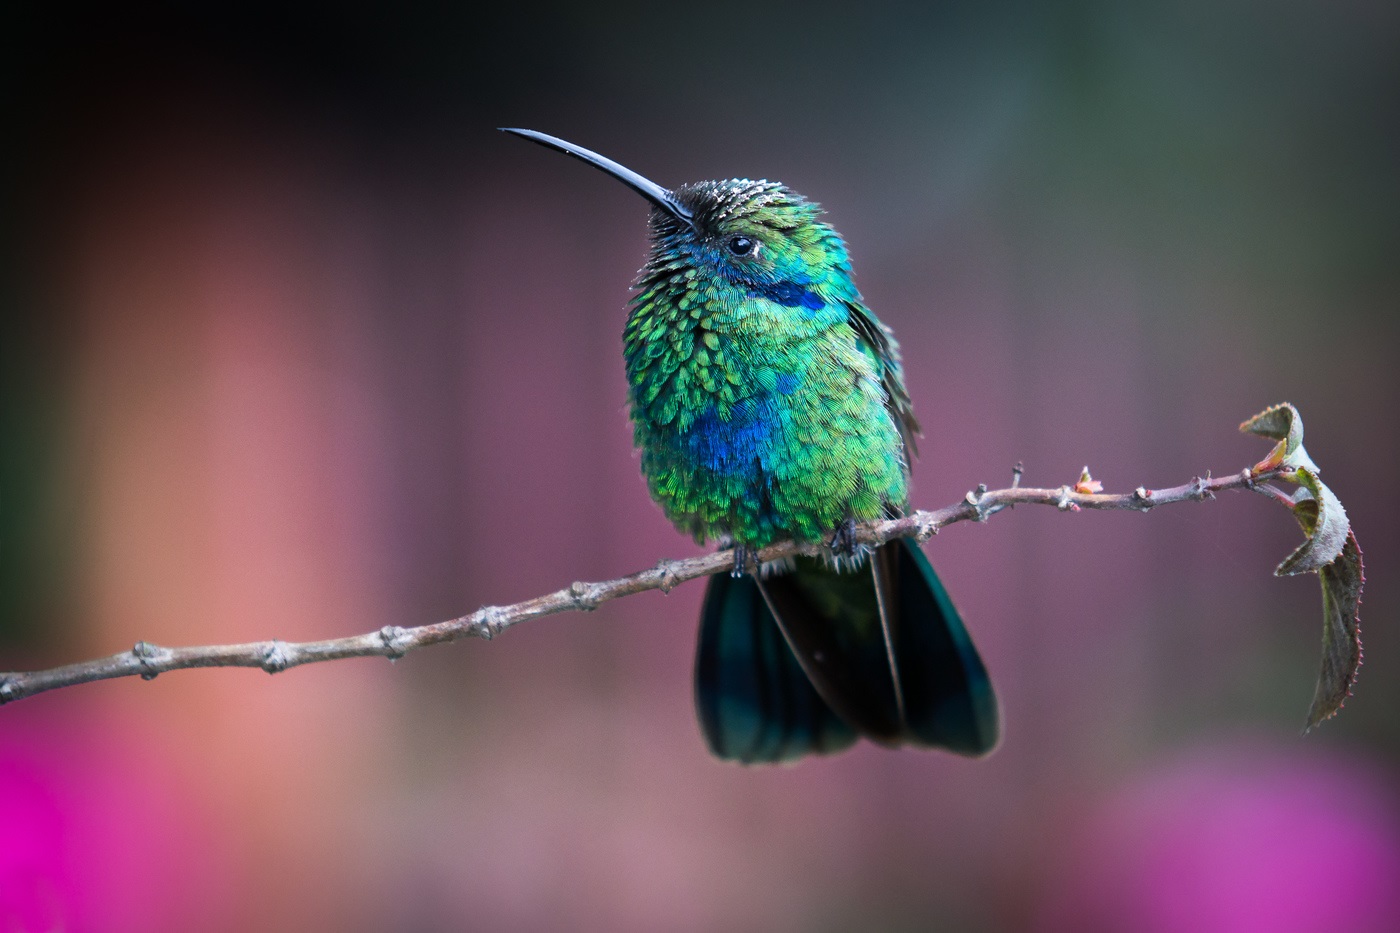 Colombian Andes: eng Foto vun engem Kolibris op enger Branche